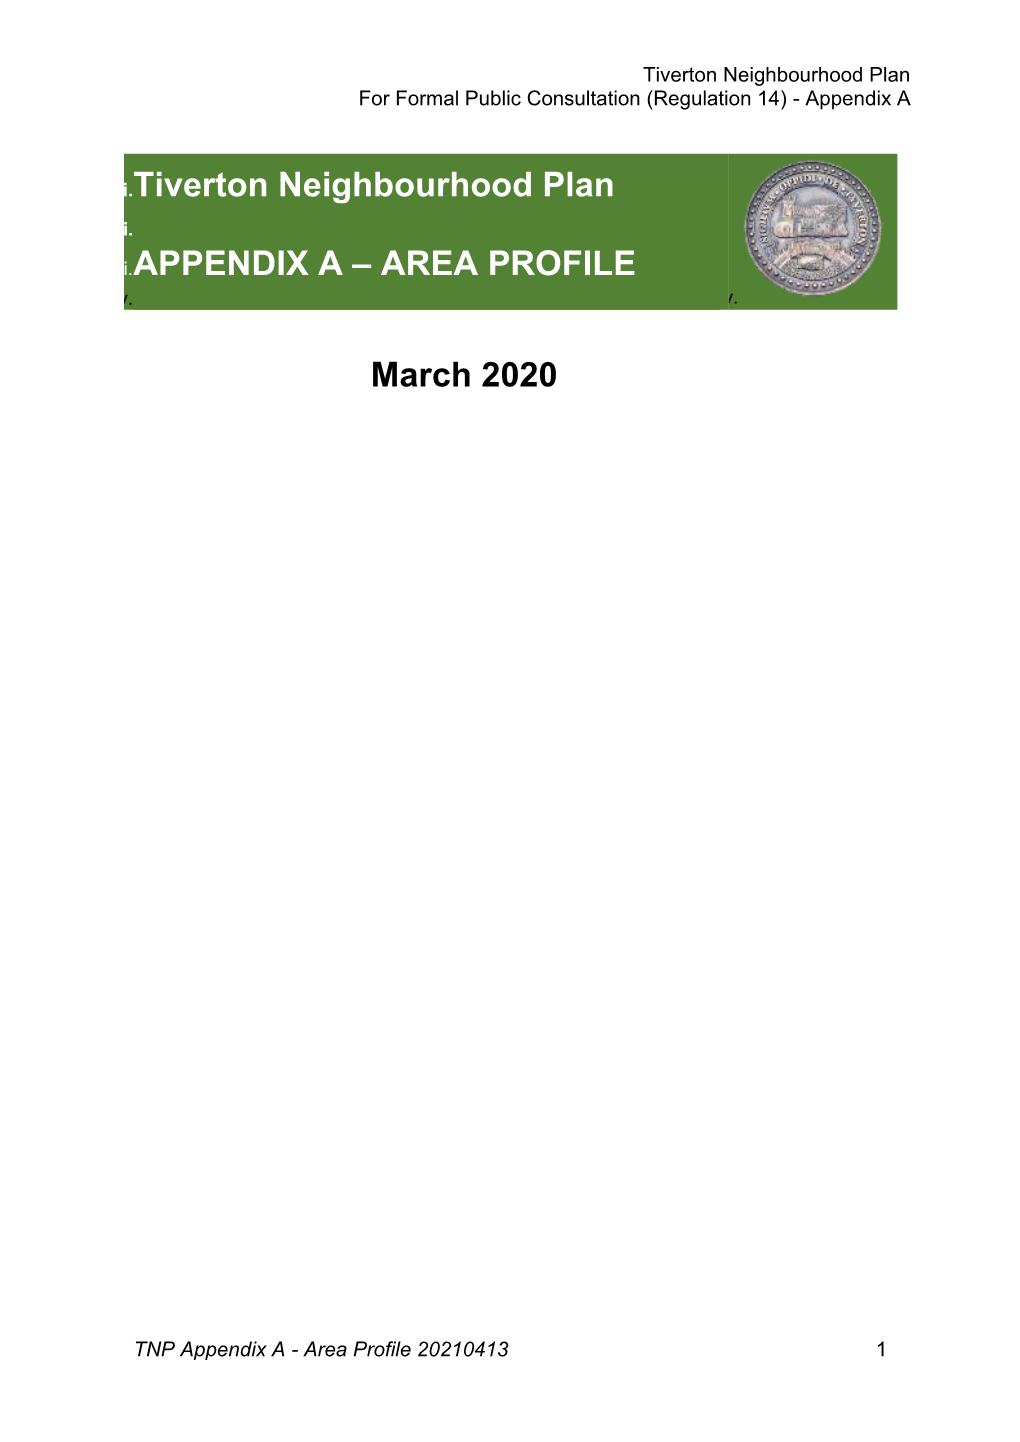 TNP Appendix a – Area Profile 20210413